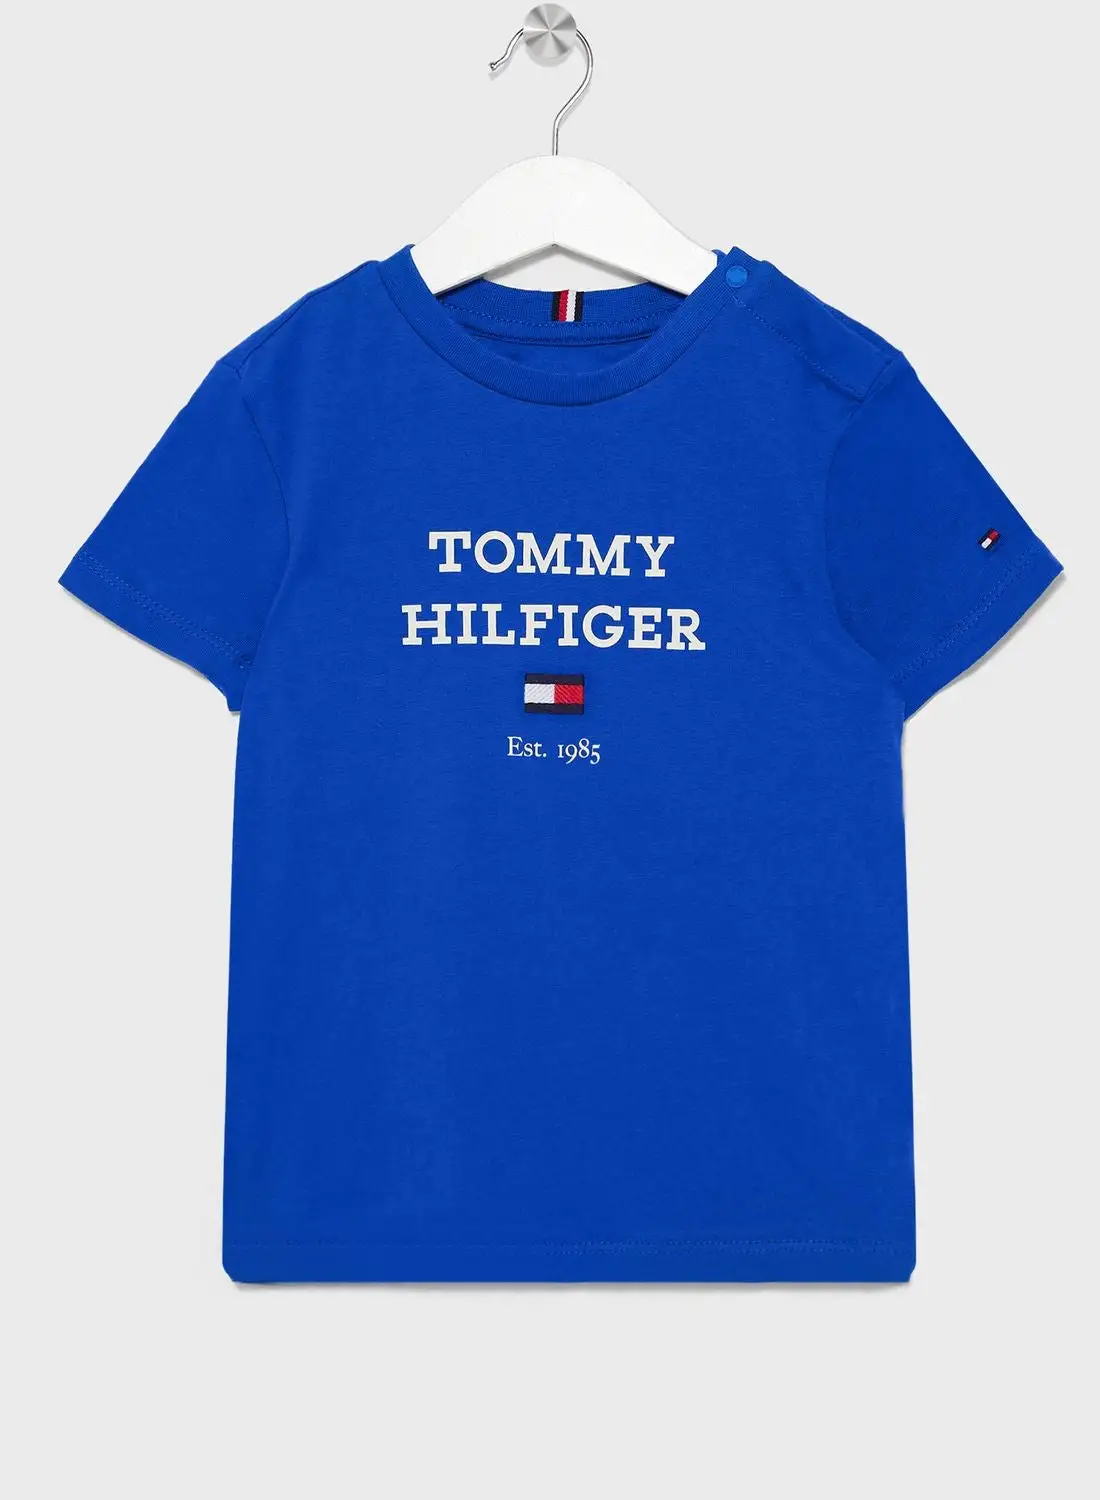 تي شيرت بشعار تومي هيلفيغر للأطفال